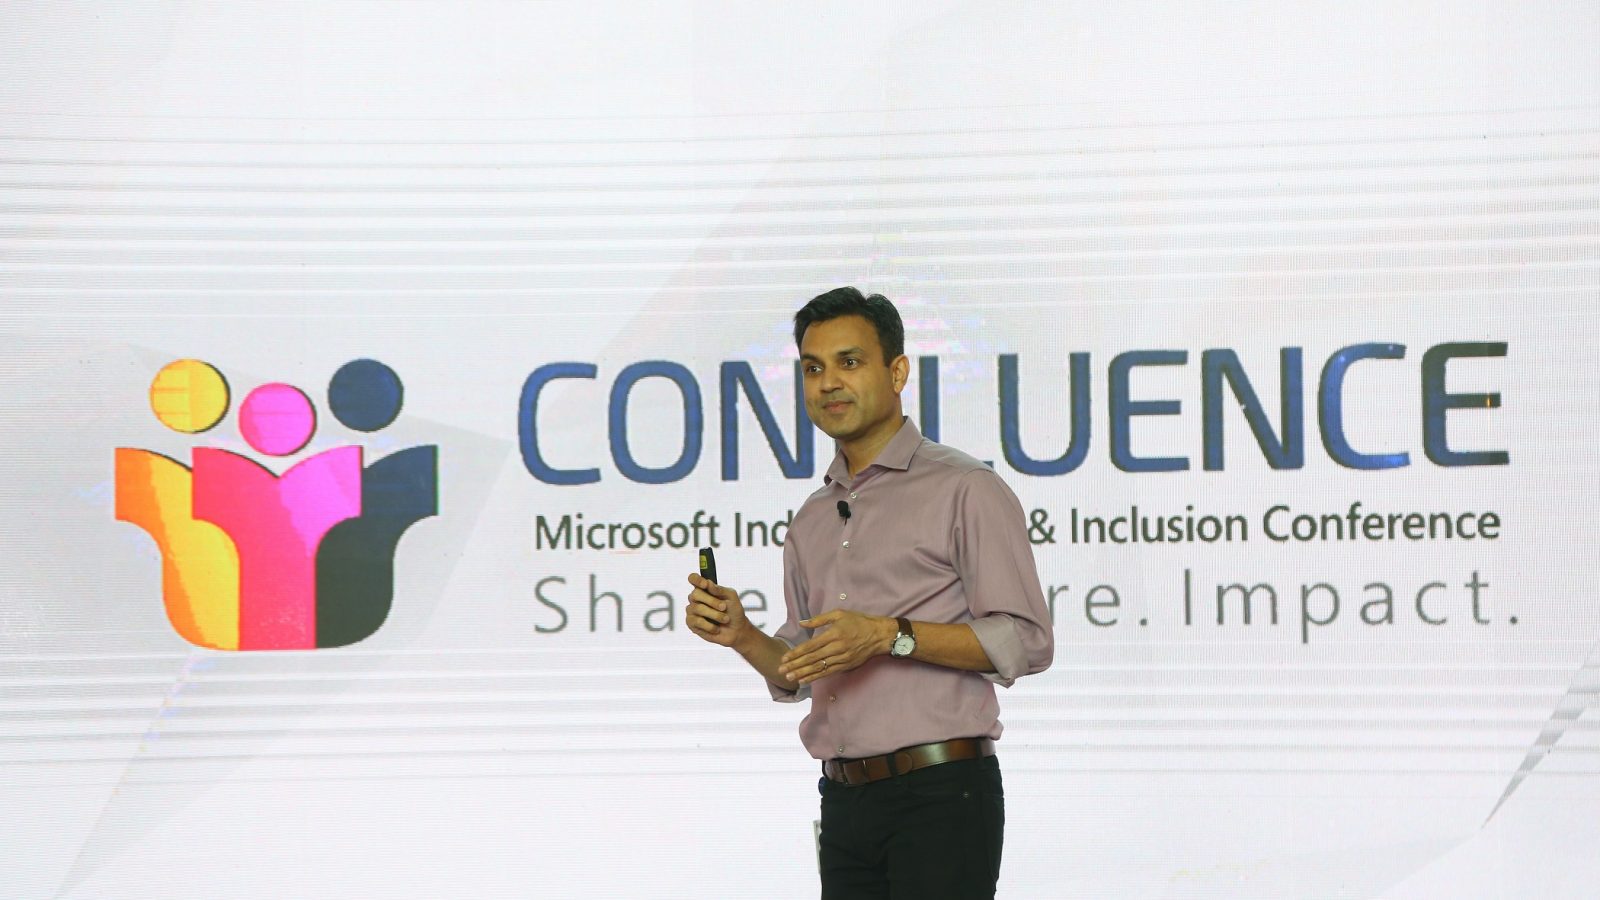 Anant Maheshwari, President, Microsoft India, speaking at Confluence 2018